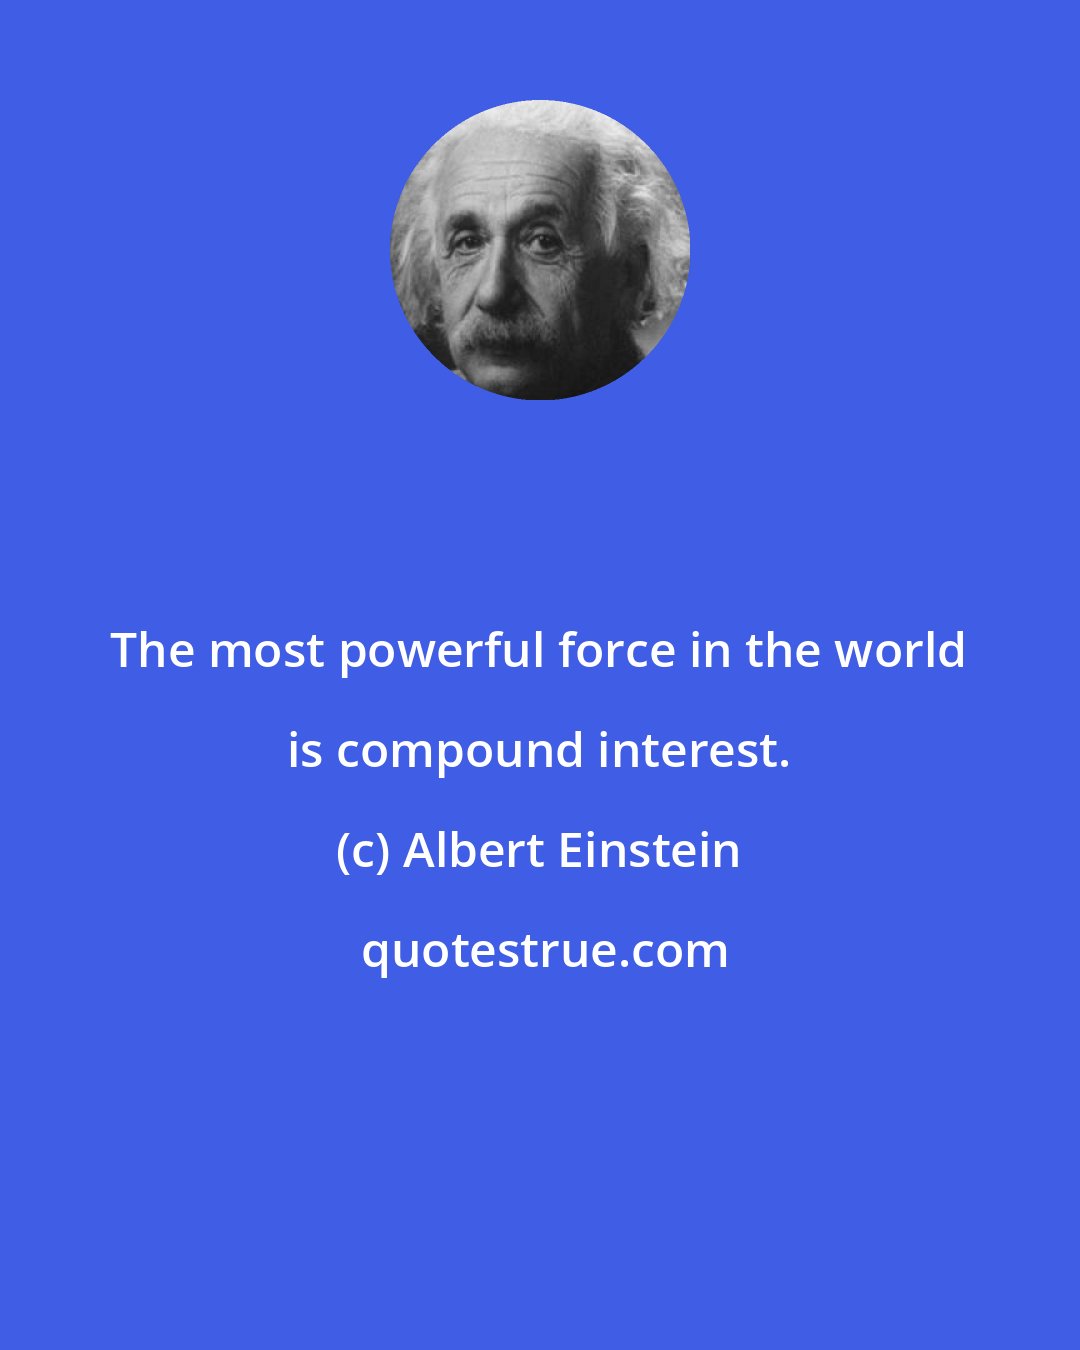 Albert Einstein: The most powerful force in the world is compound interest.